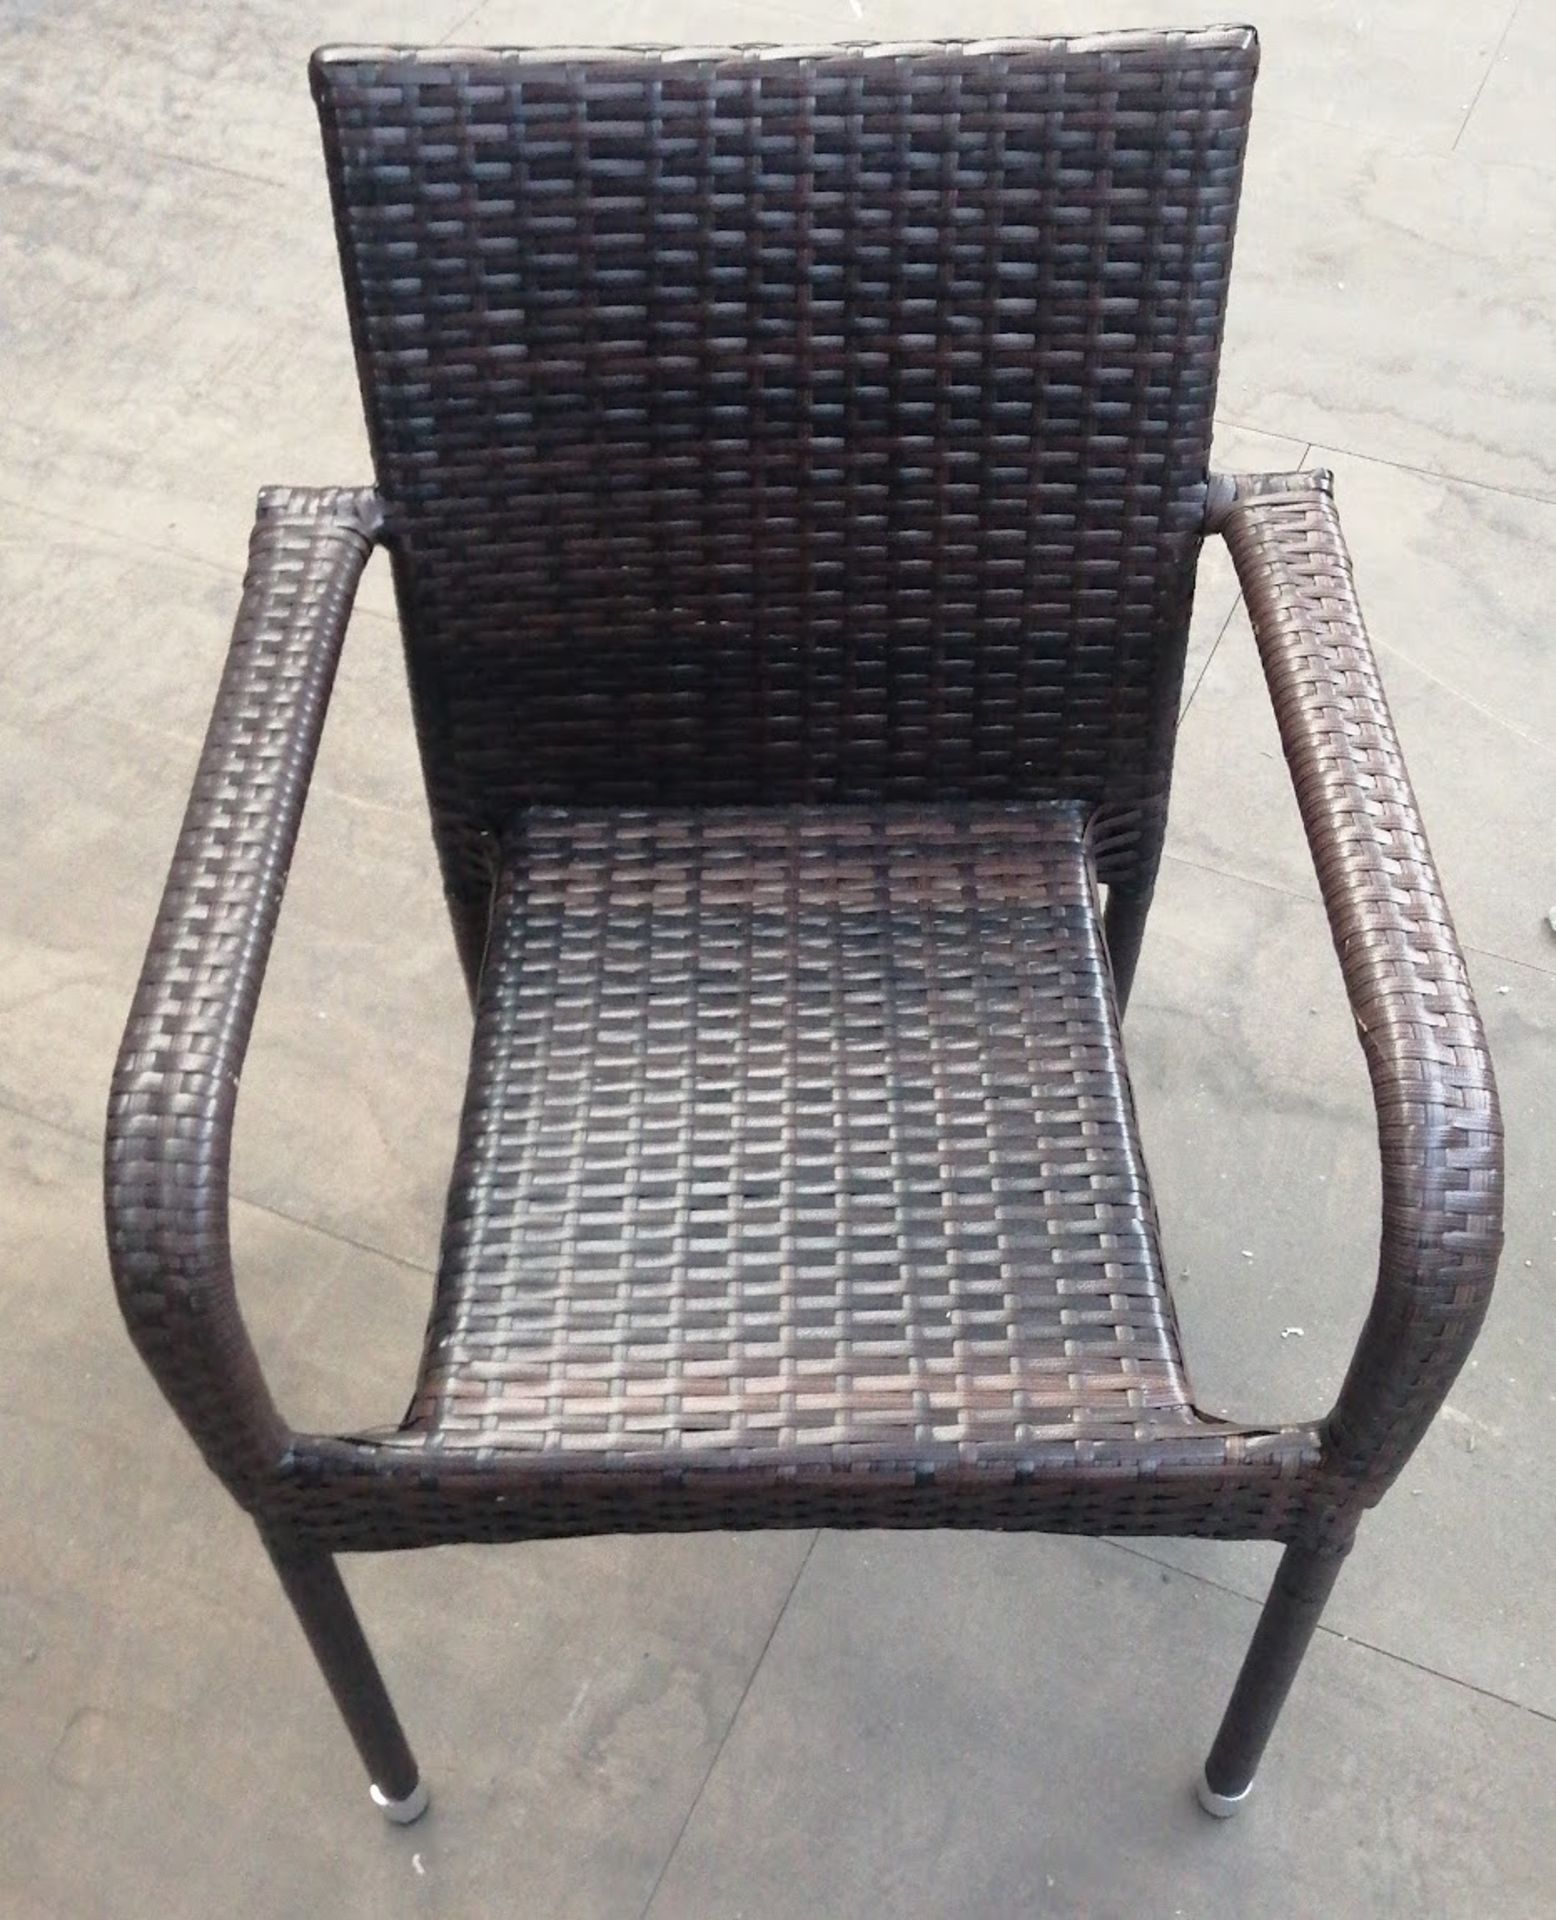 Authentic â€˜Rattanâ€™ Branded Chair - Dark Brown - Ex-Display!